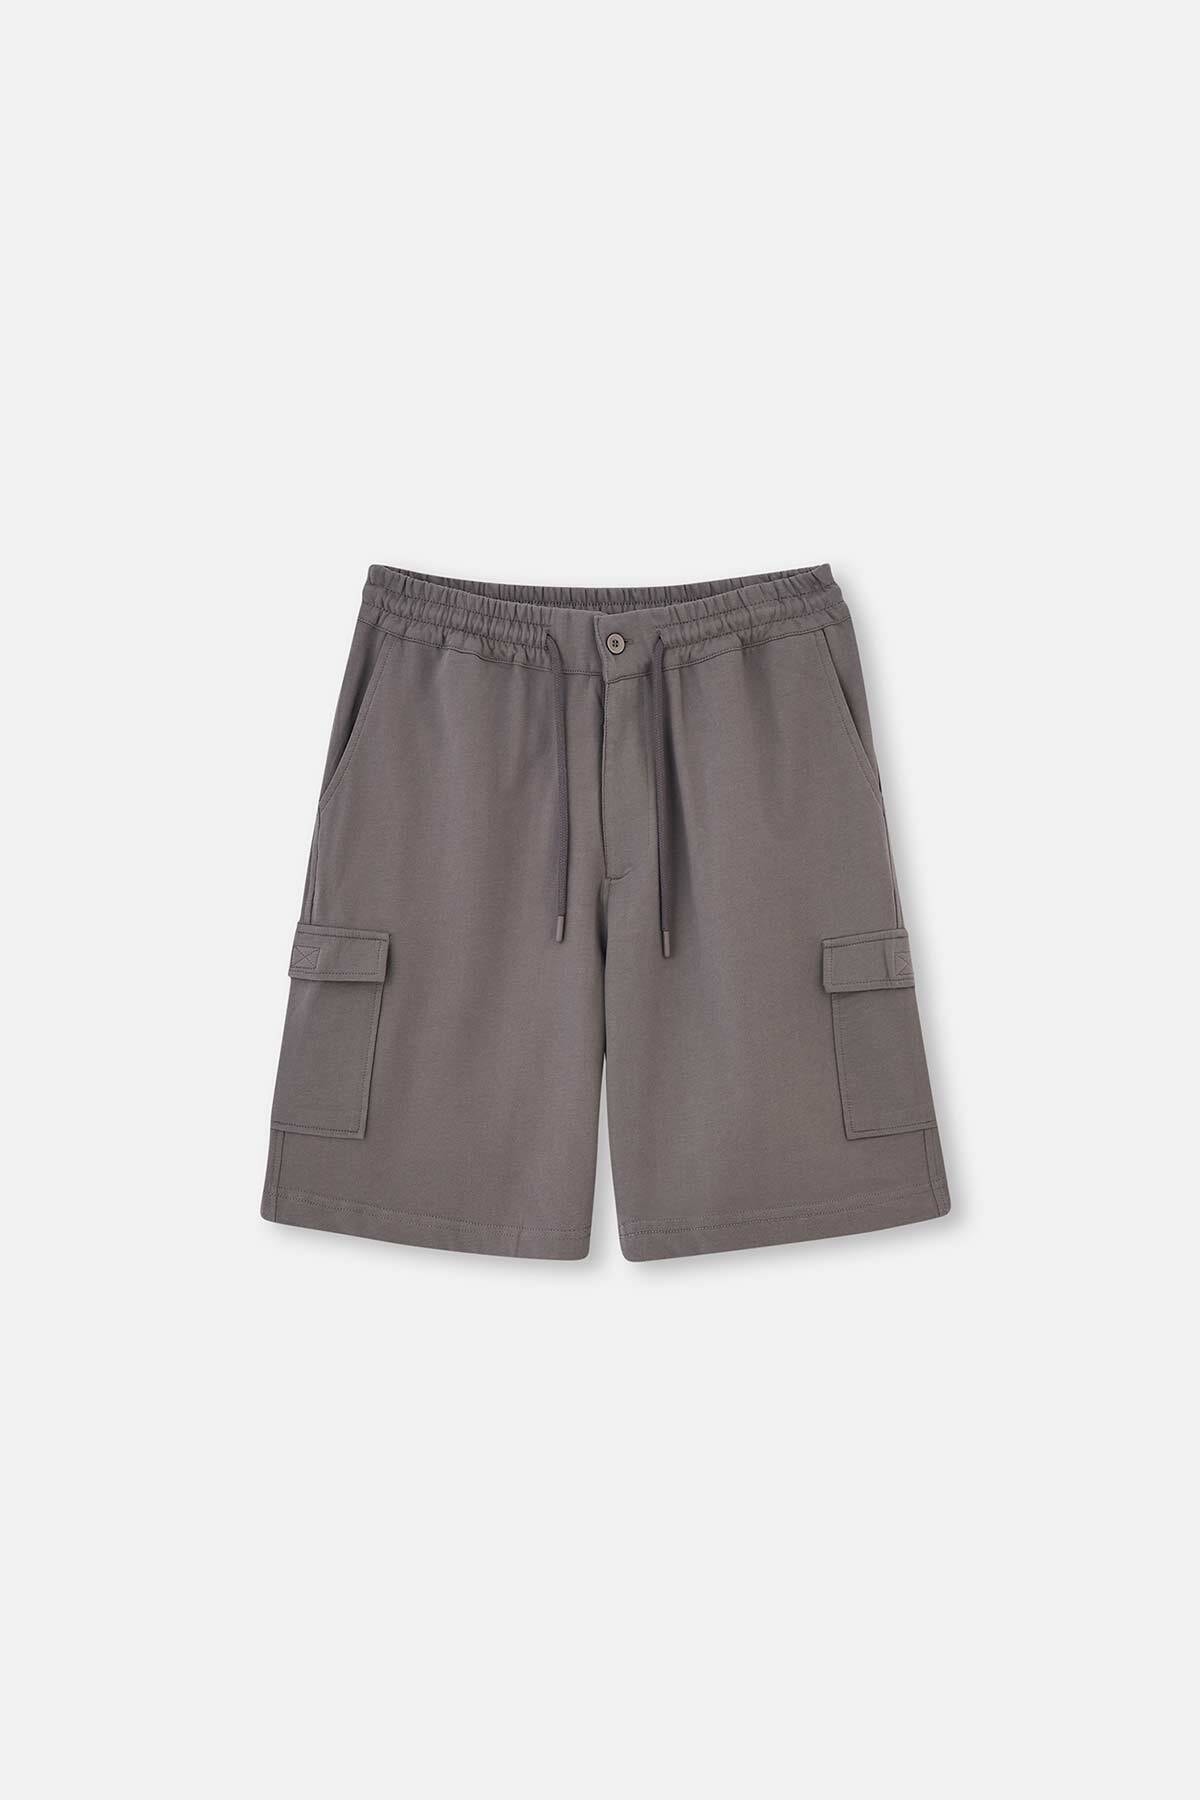 Dagi Gray Cargo Pocket Shorts